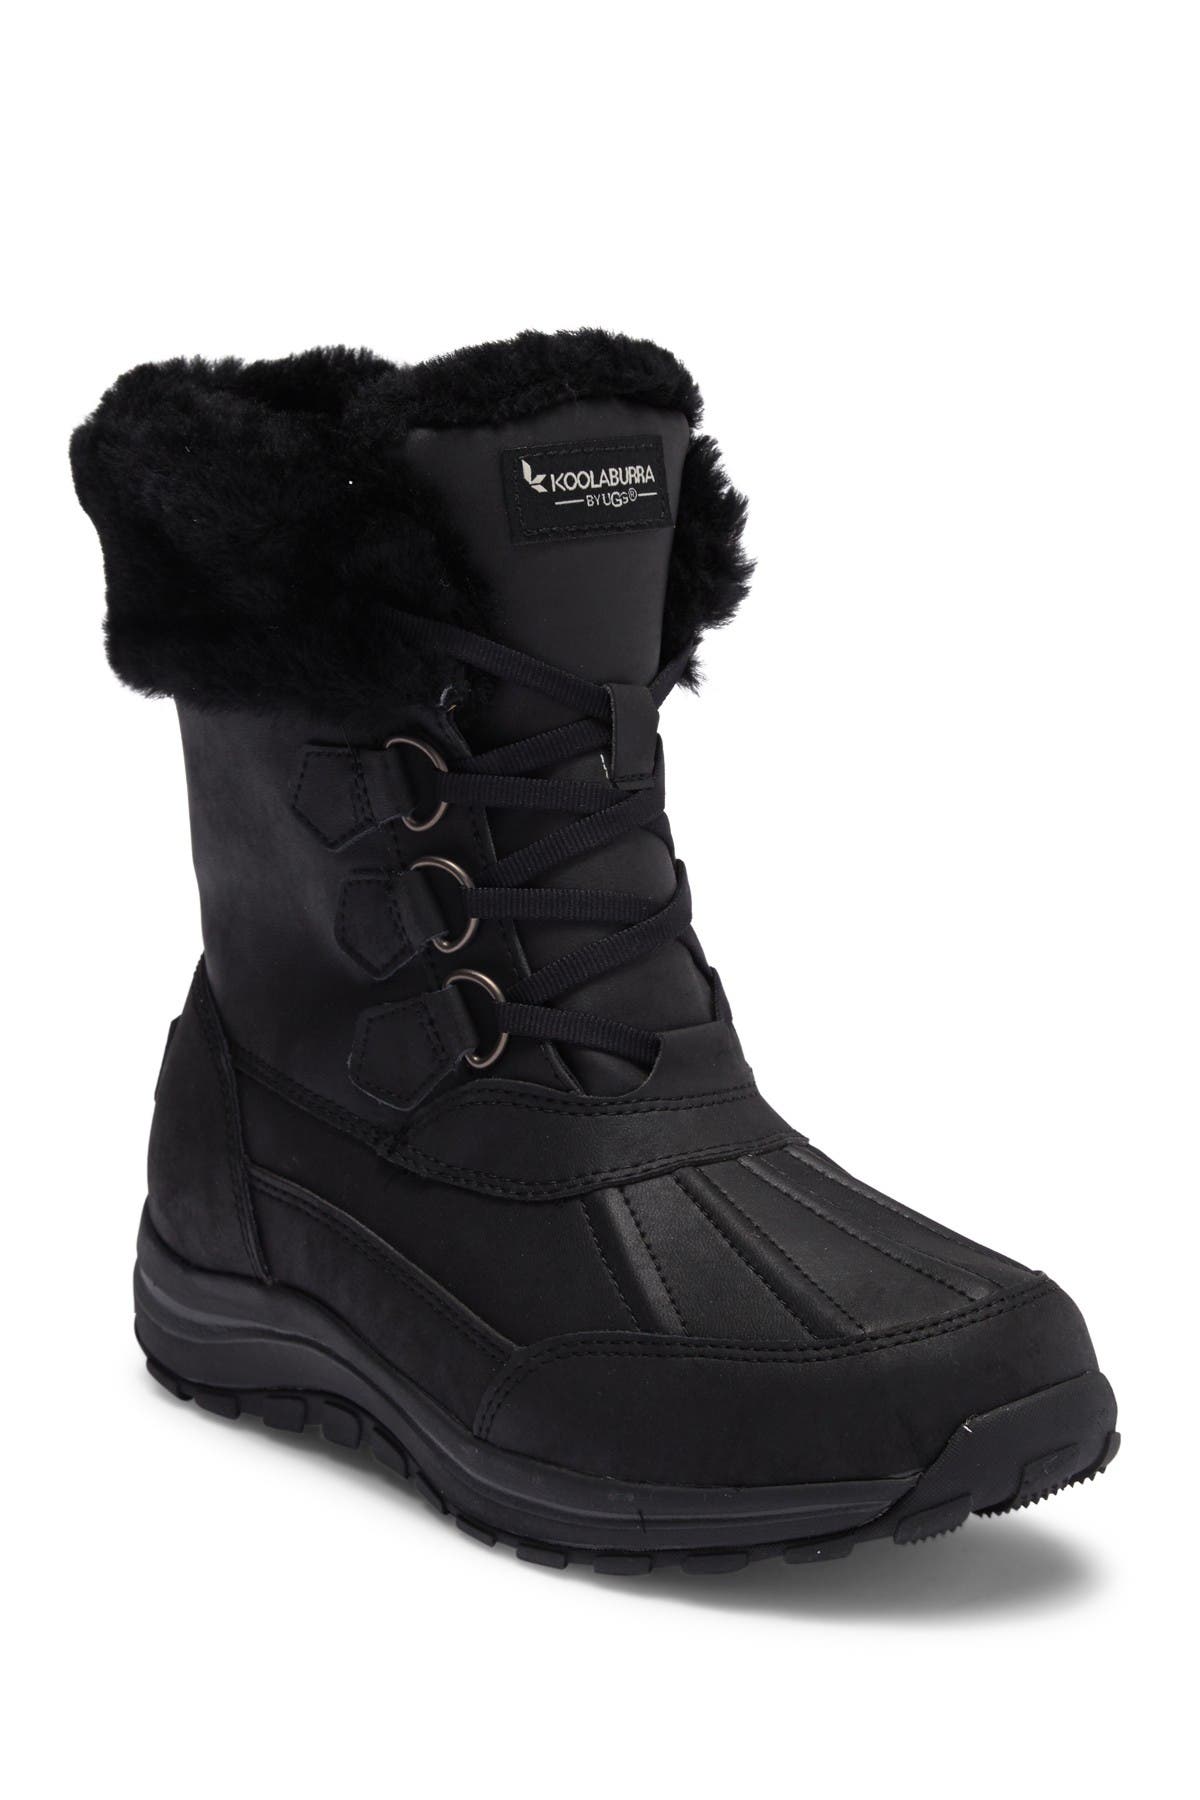 koolaburra waterproof boots